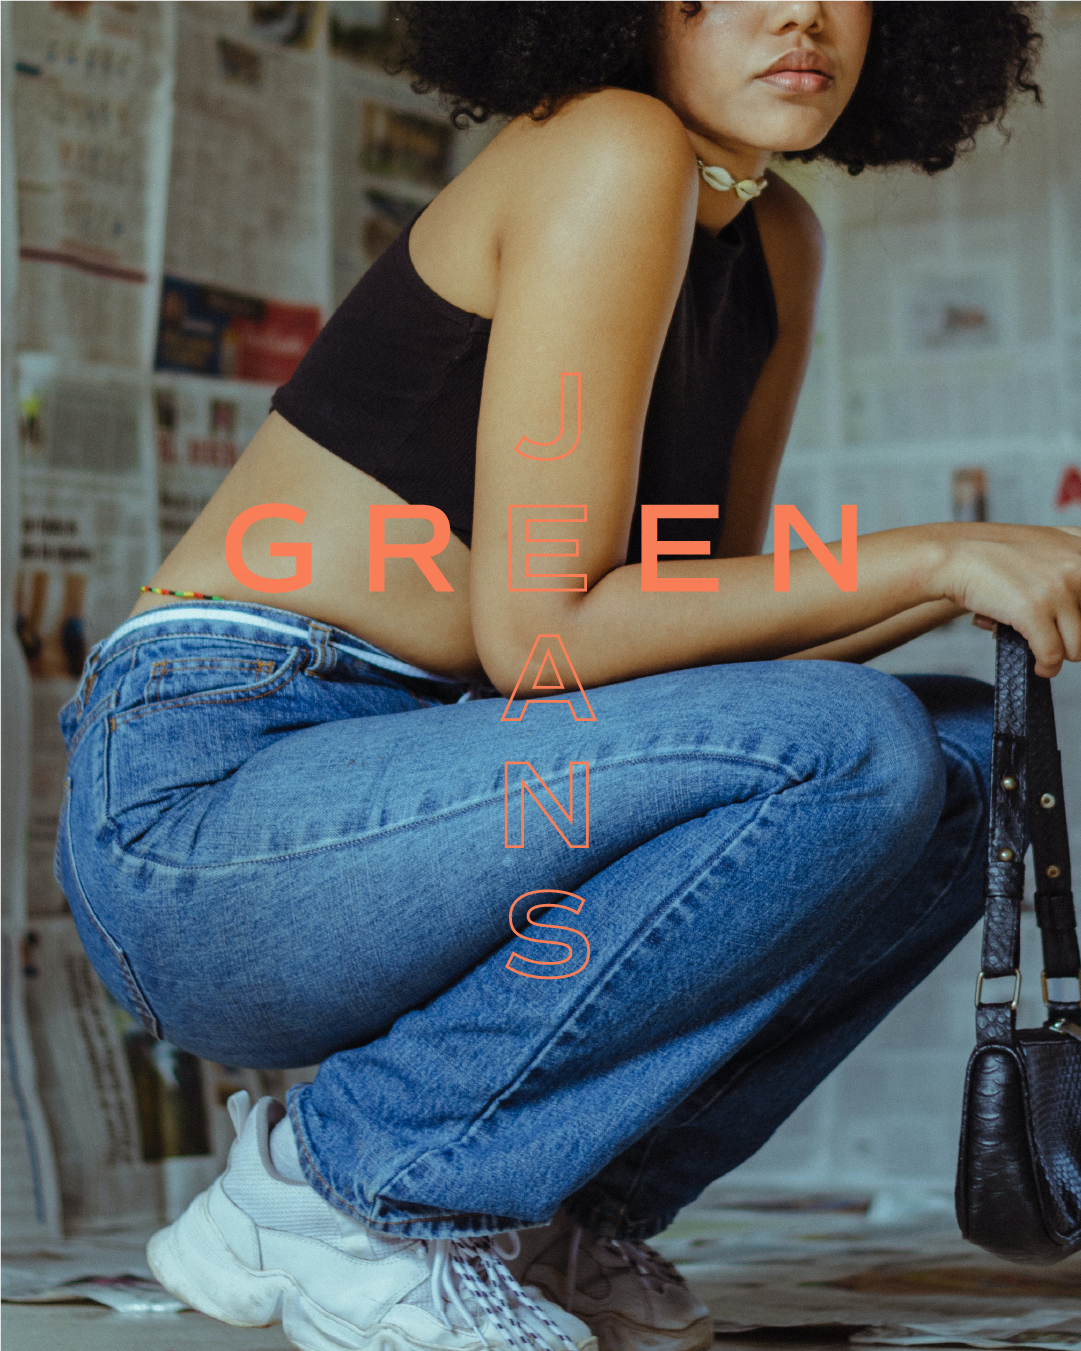 IG_Brief Babes Green JeansArtboard 2 copy 2.png